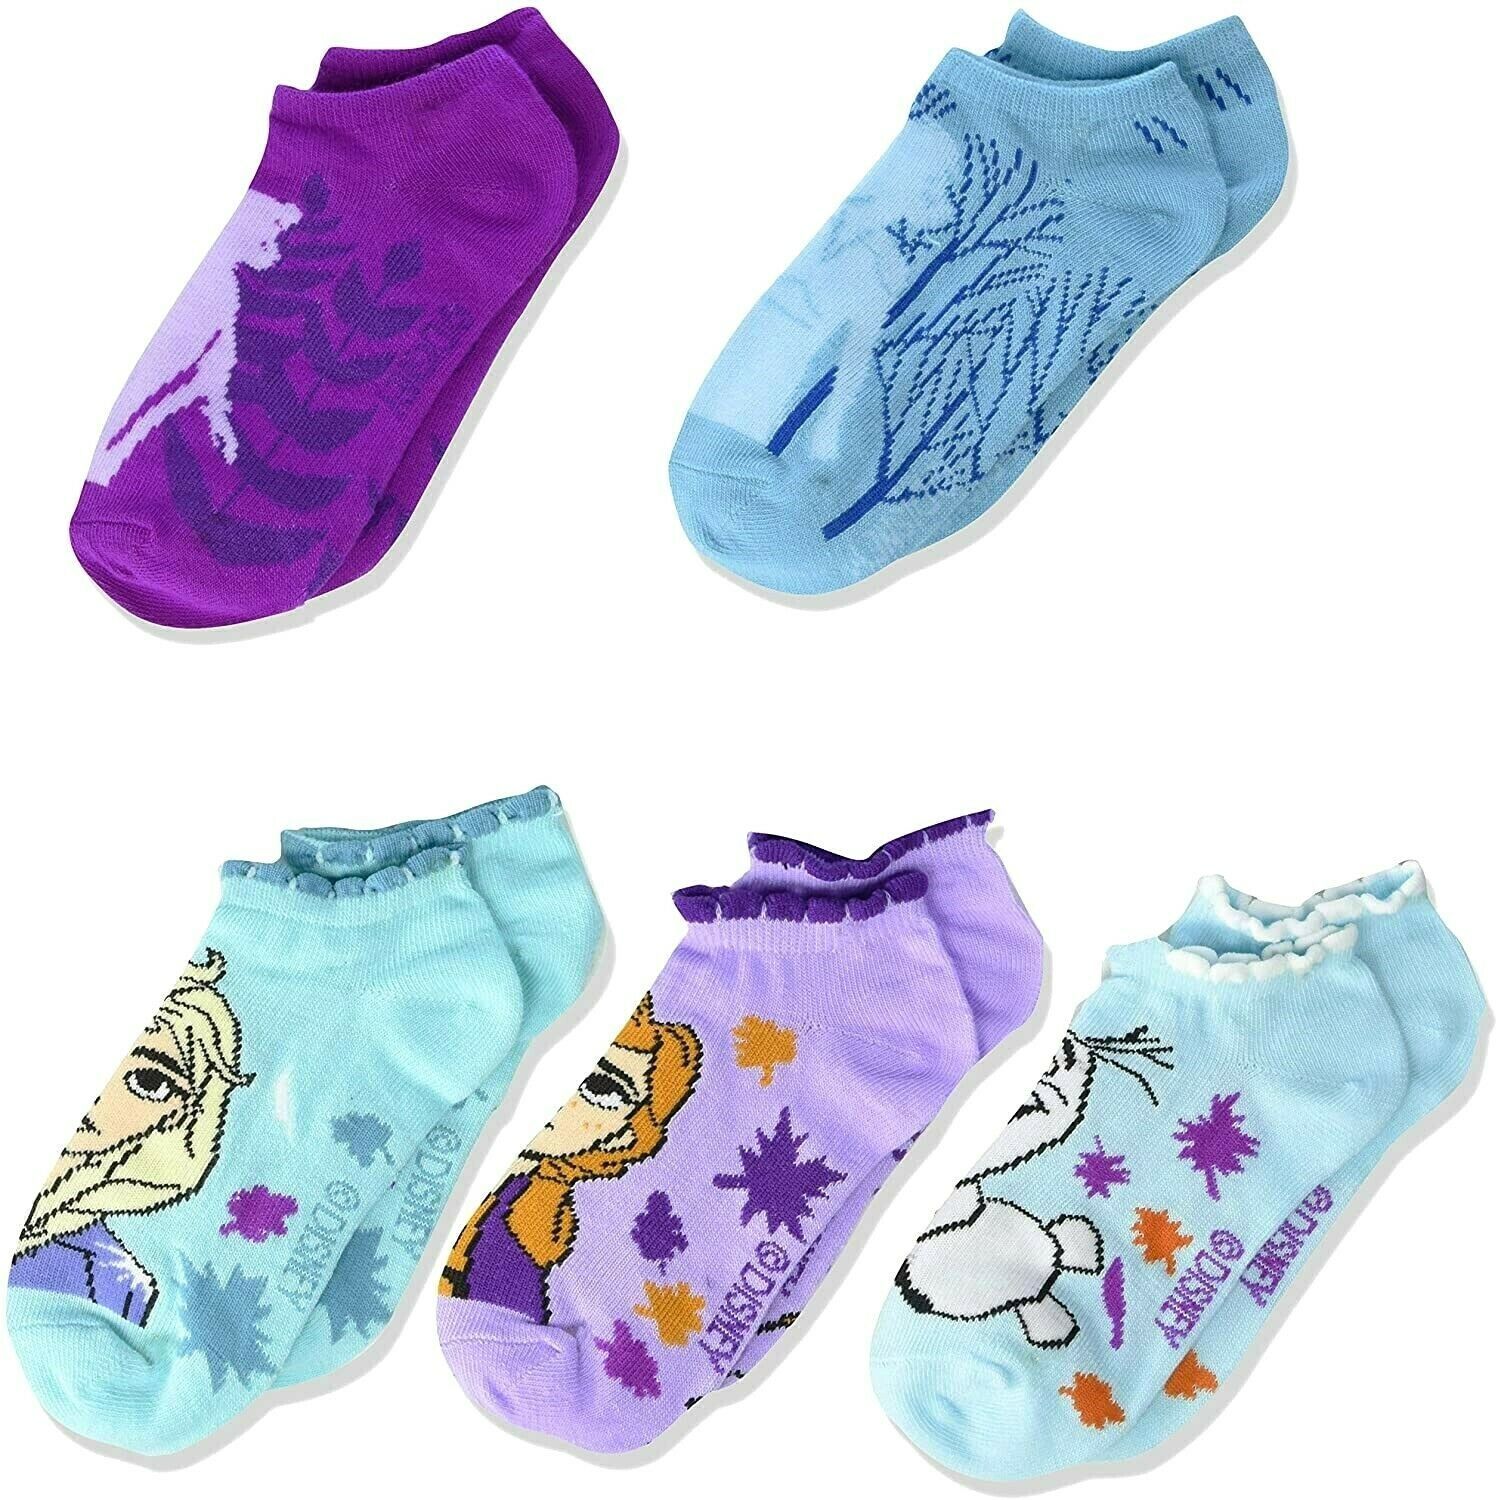 DISNEY FROZEN ANNA ELSA OLAF 5-Pack Low Cut Socks Girls Ages 3-8 (Shoe Size 8-3)